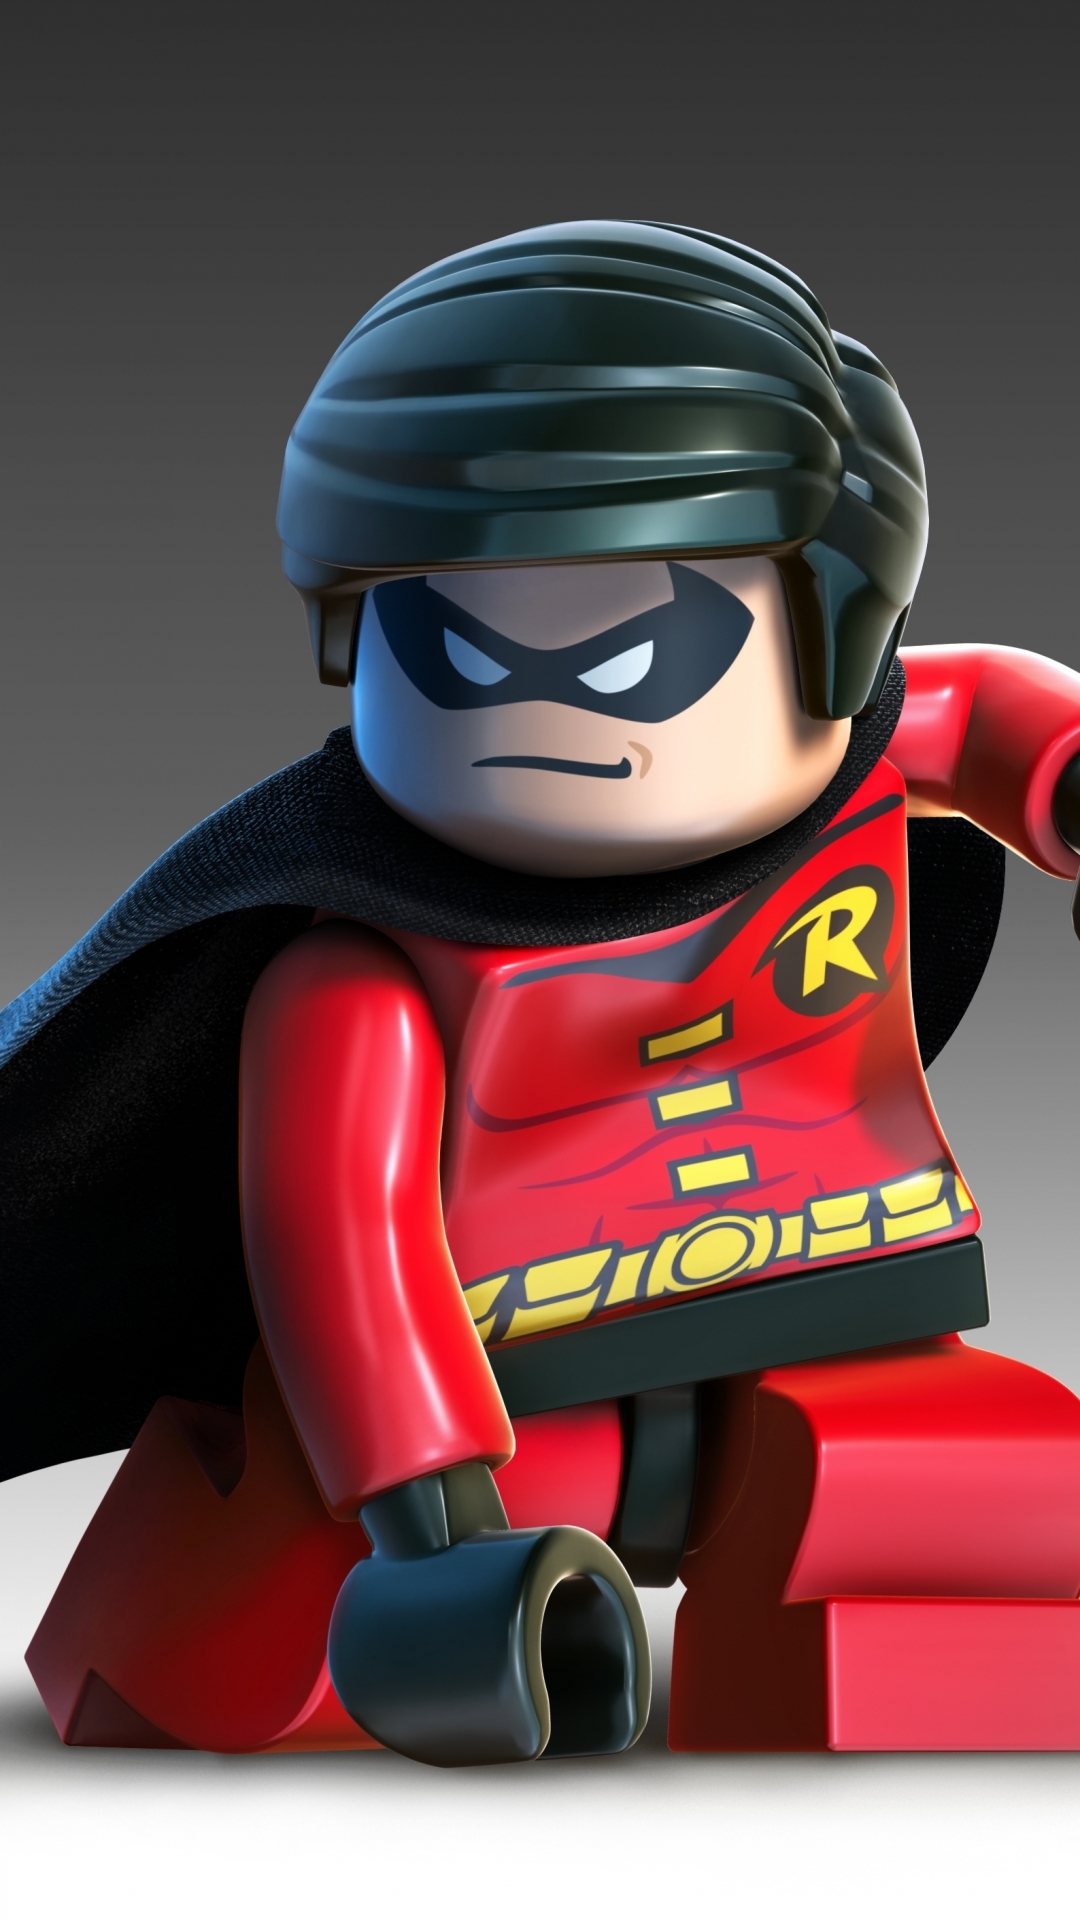 Handy-Wallpaper Lego, Computerspiele, Robin (Dc Comics), Lego Batman 2: Dc Super Heroes kostenlos herunterladen.